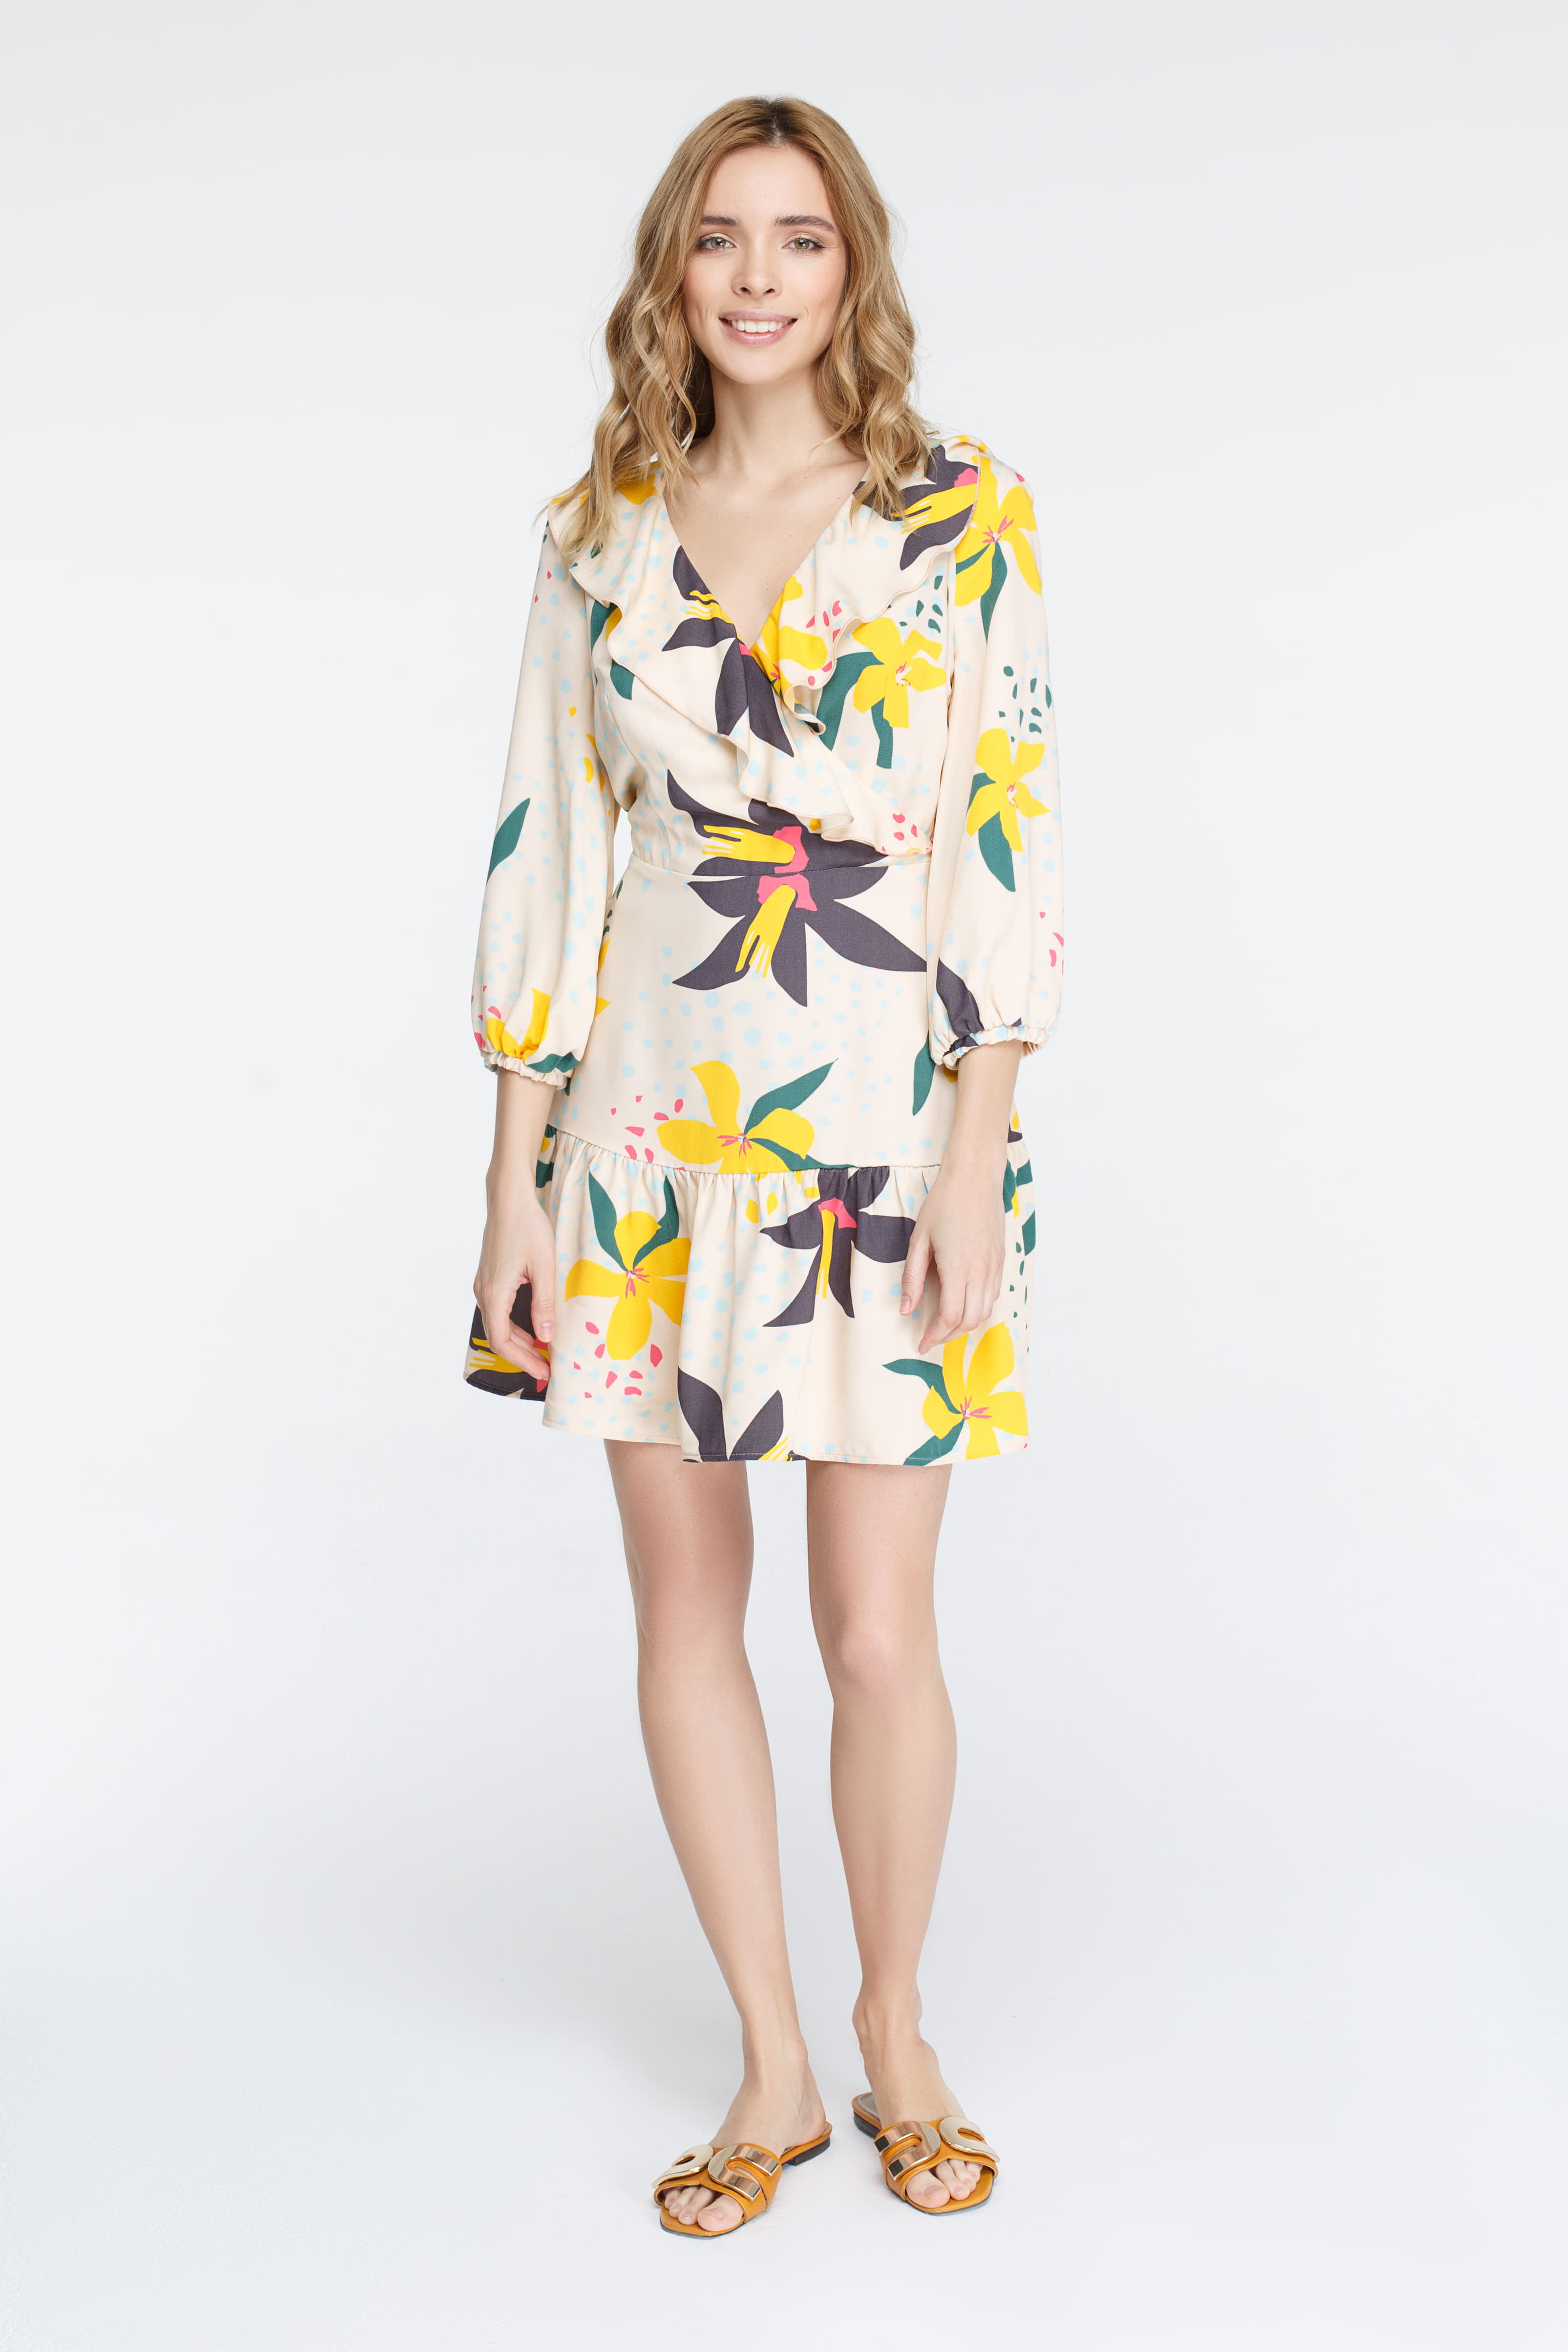 Beige dress in floral print, photo 1